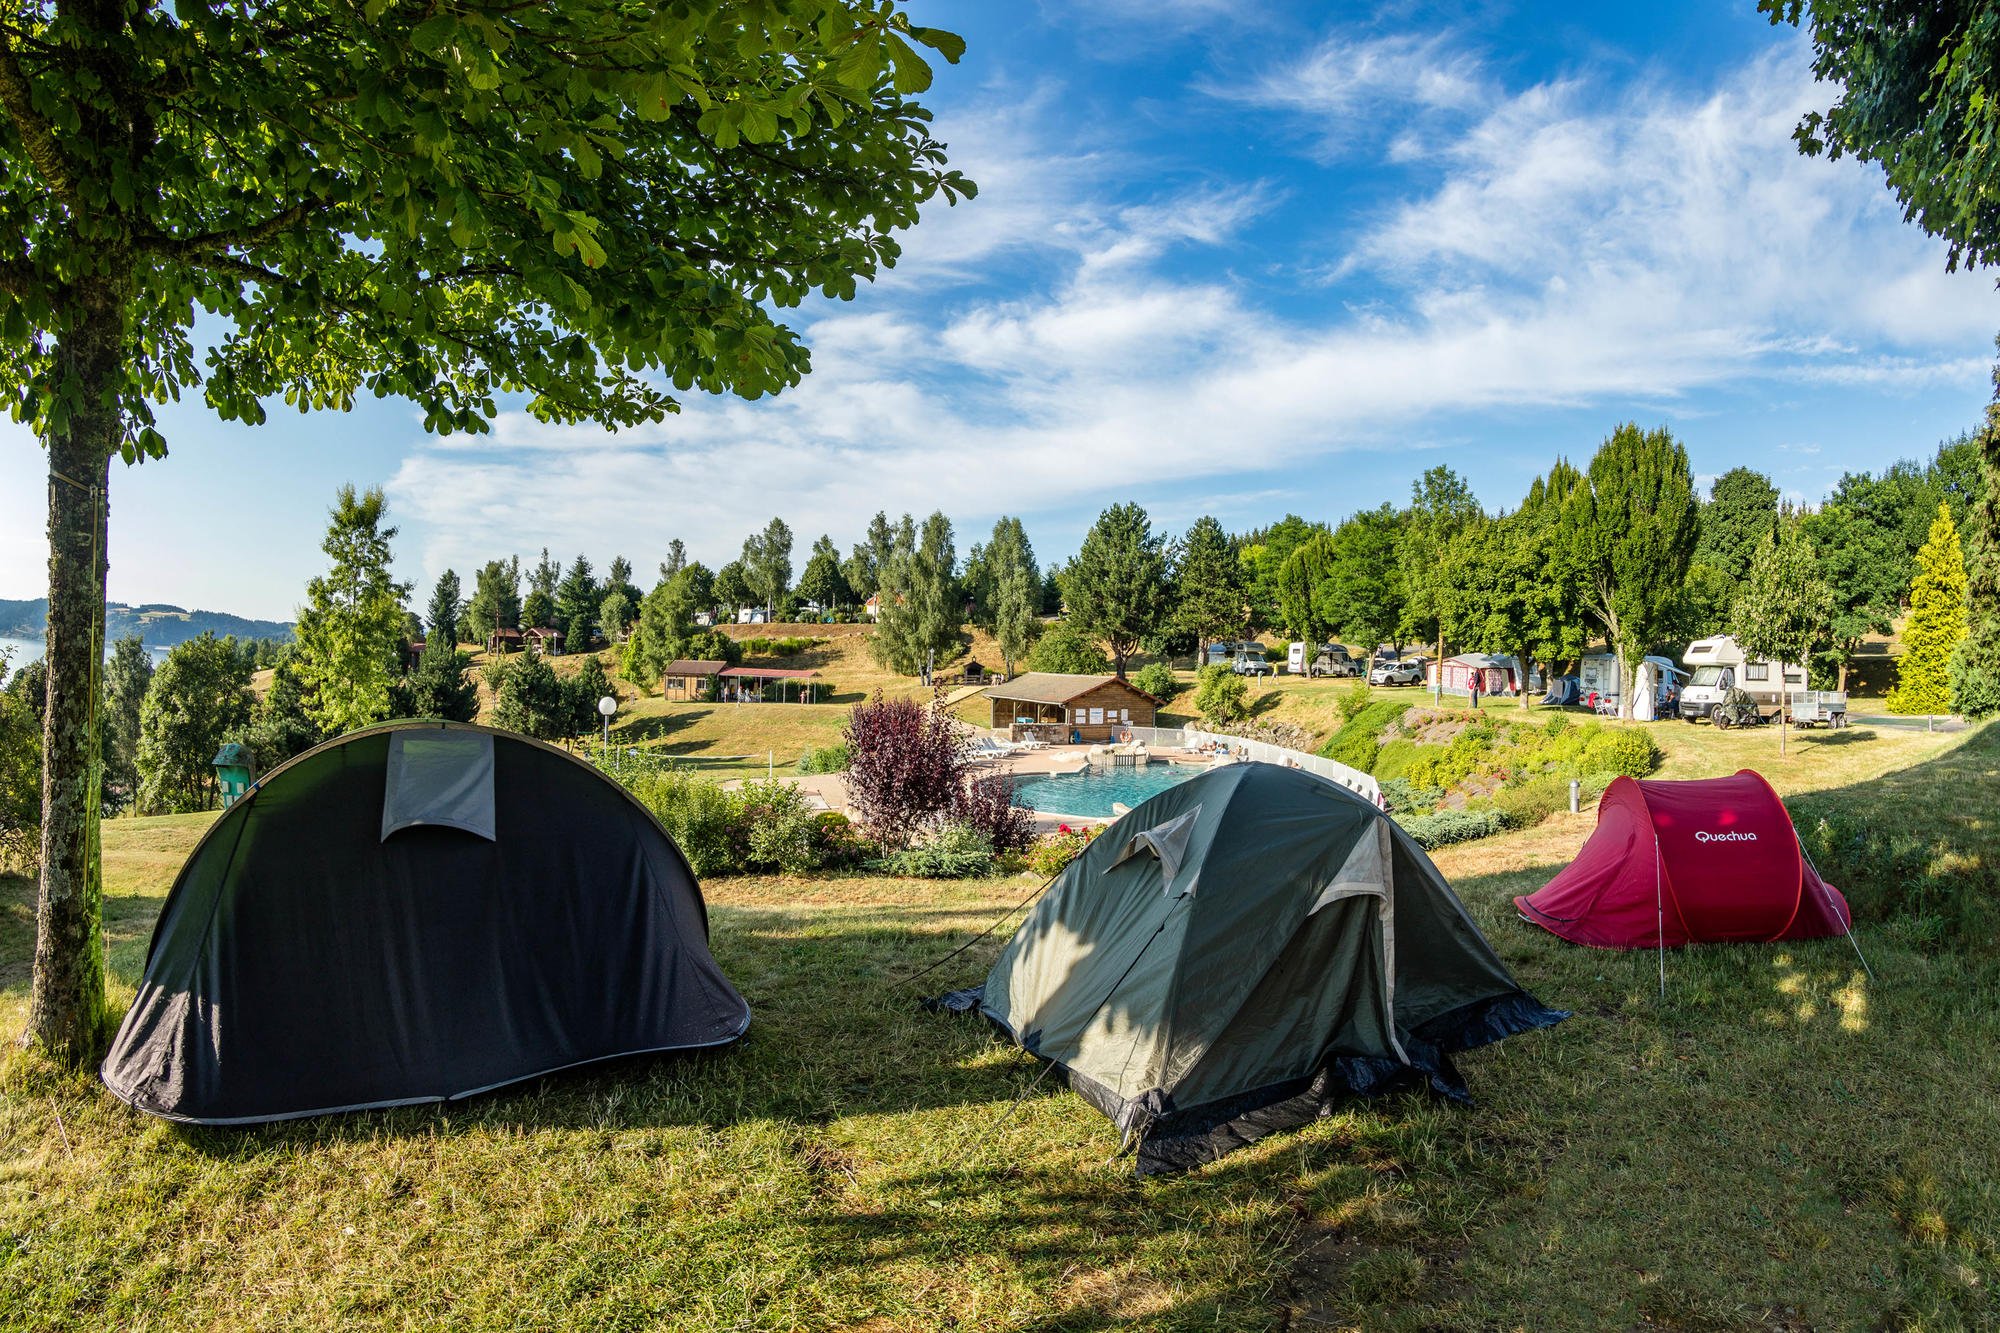 498/Photos/Camping/les-terrasses-du-lac-camping.jpg